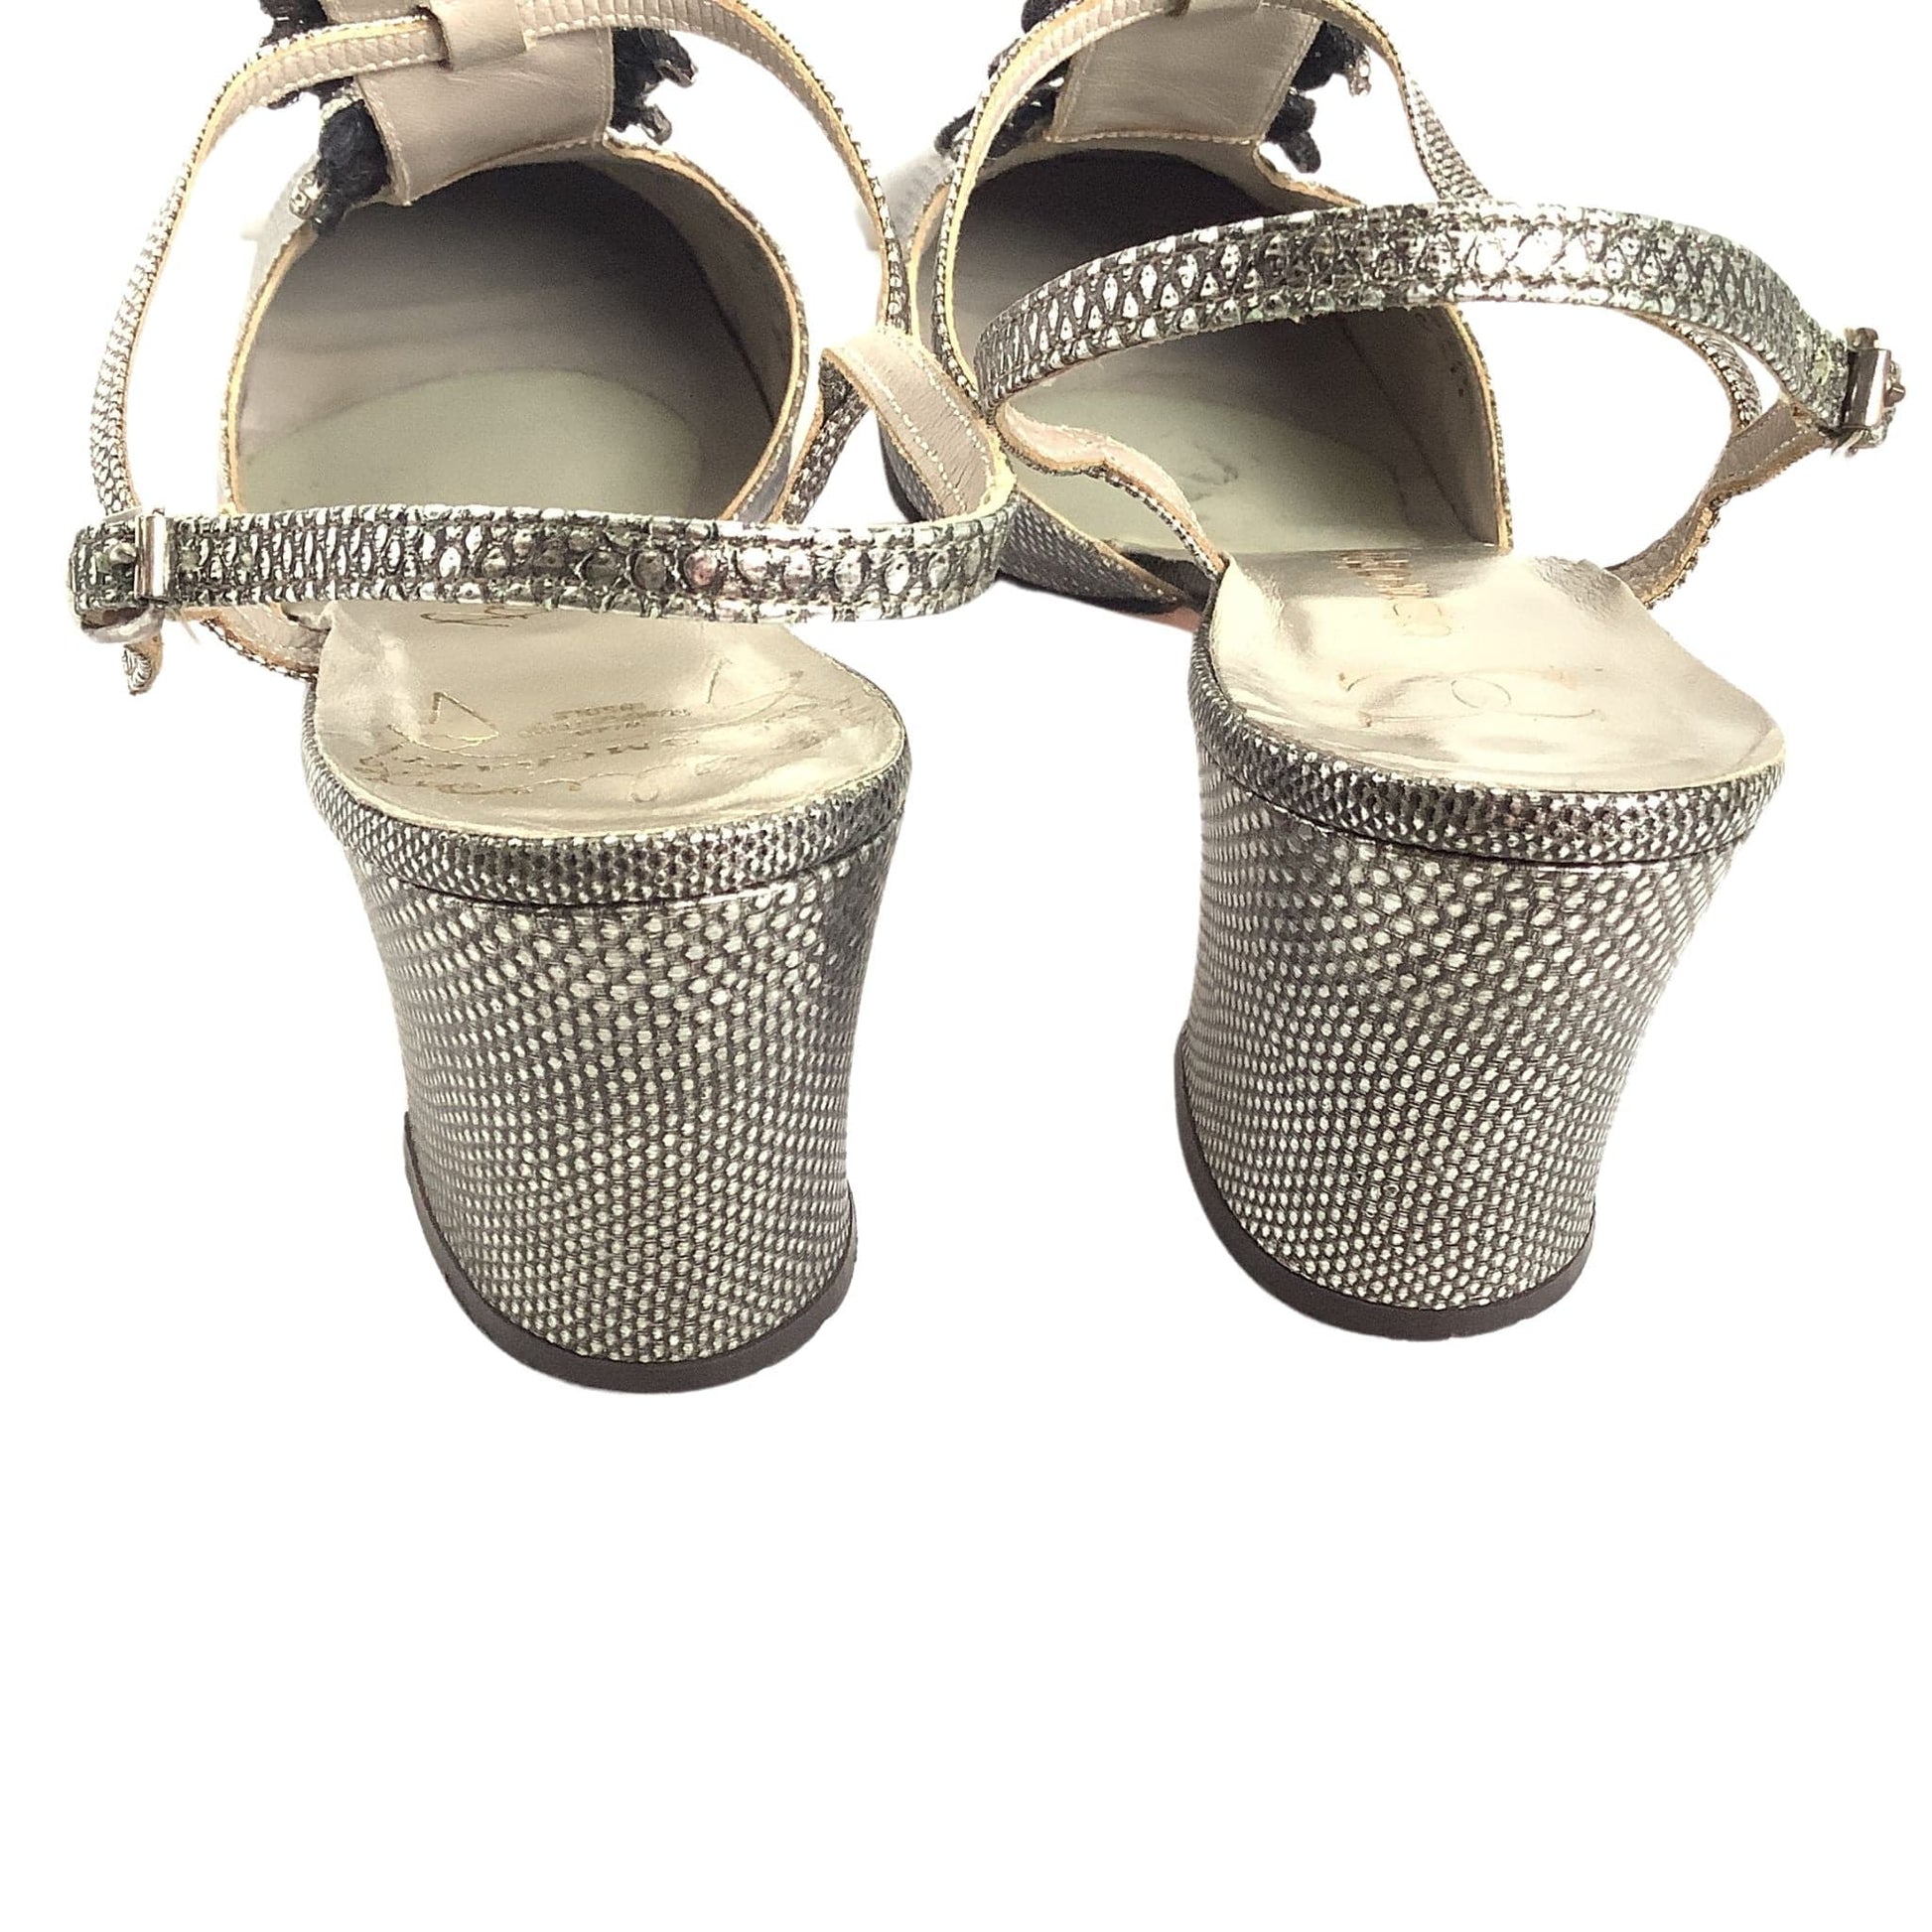 Customcraft Silver Heels 8 / Silver / Vintage 1960s